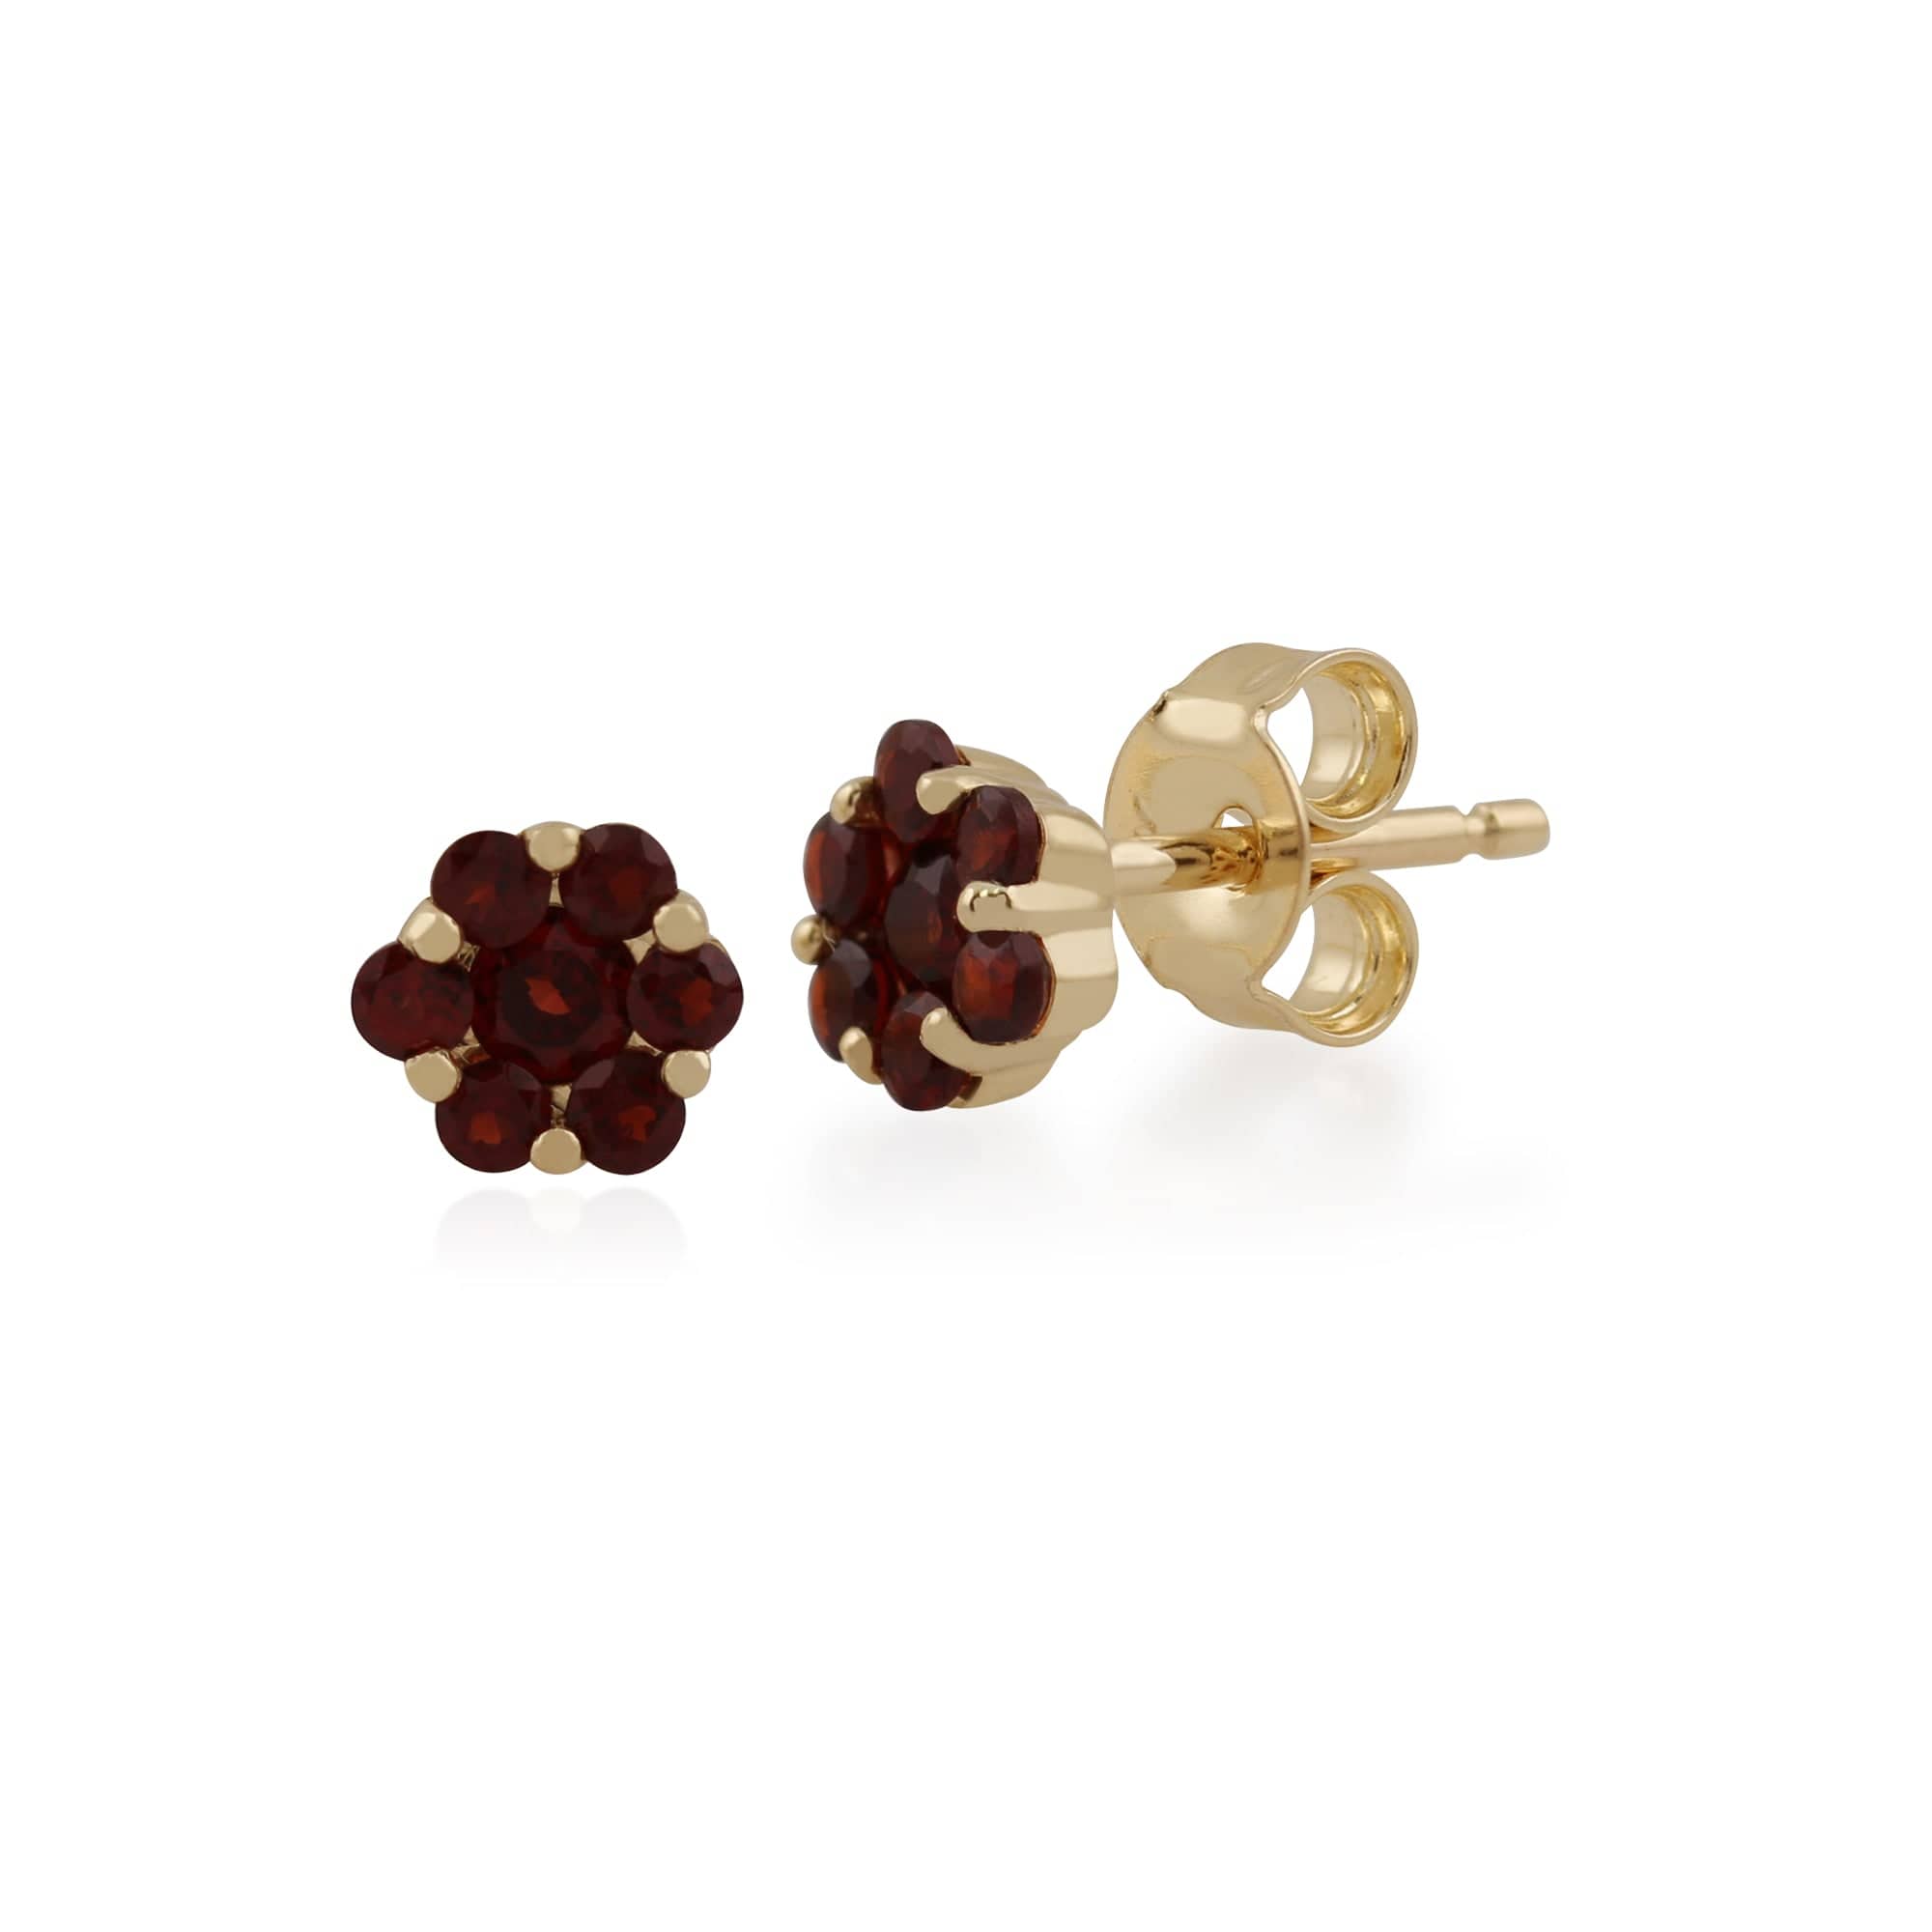 Floral Round Garnet Cluster Stud Earrings in 9ct Yellow Gold - Gemondo